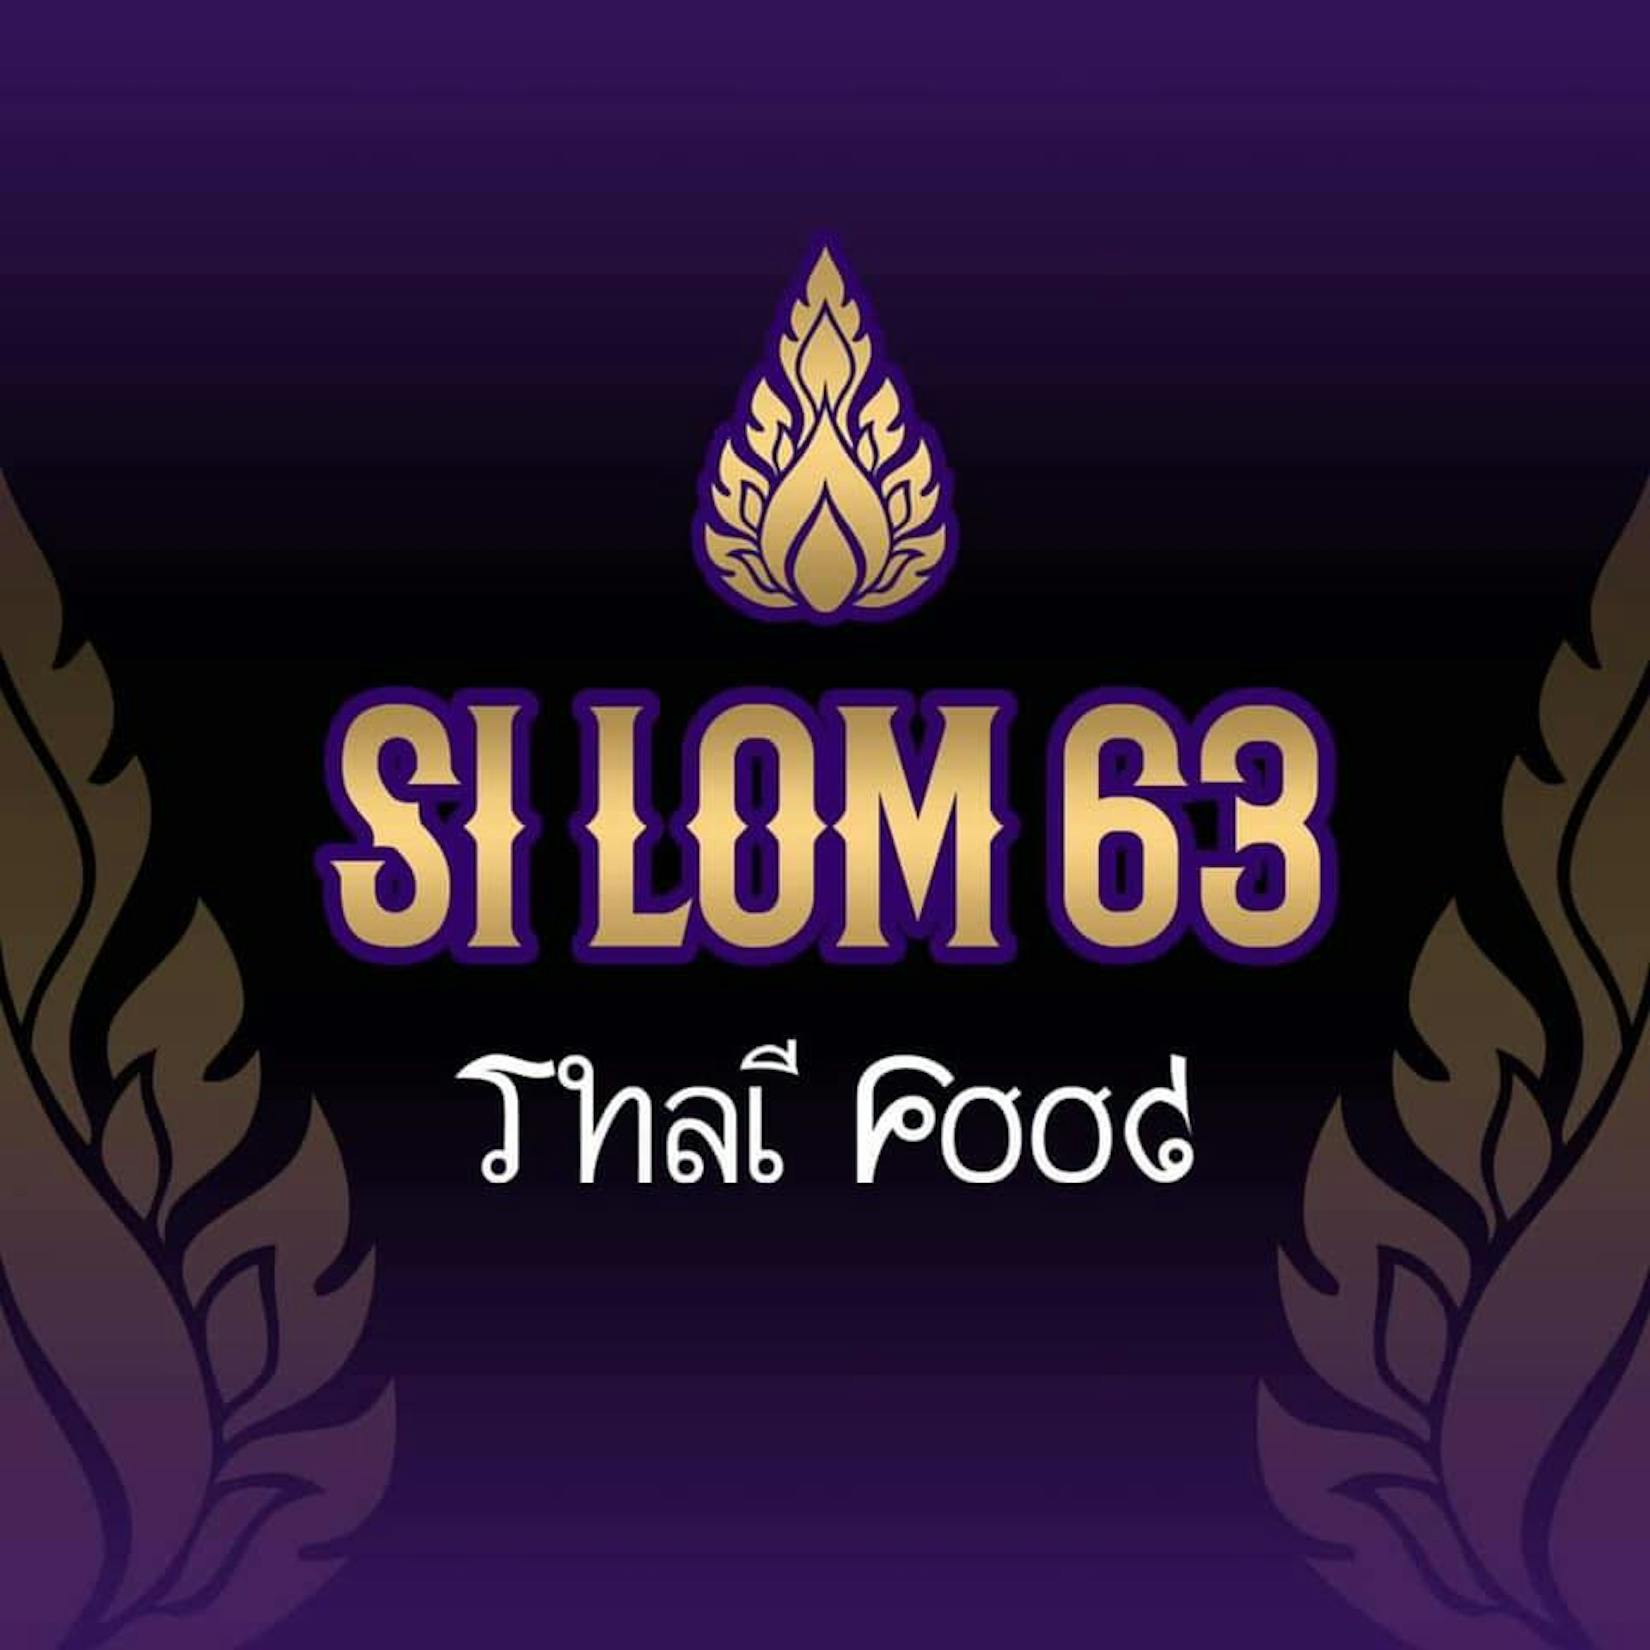 Si Lom 63 Thai Street Food | yathar